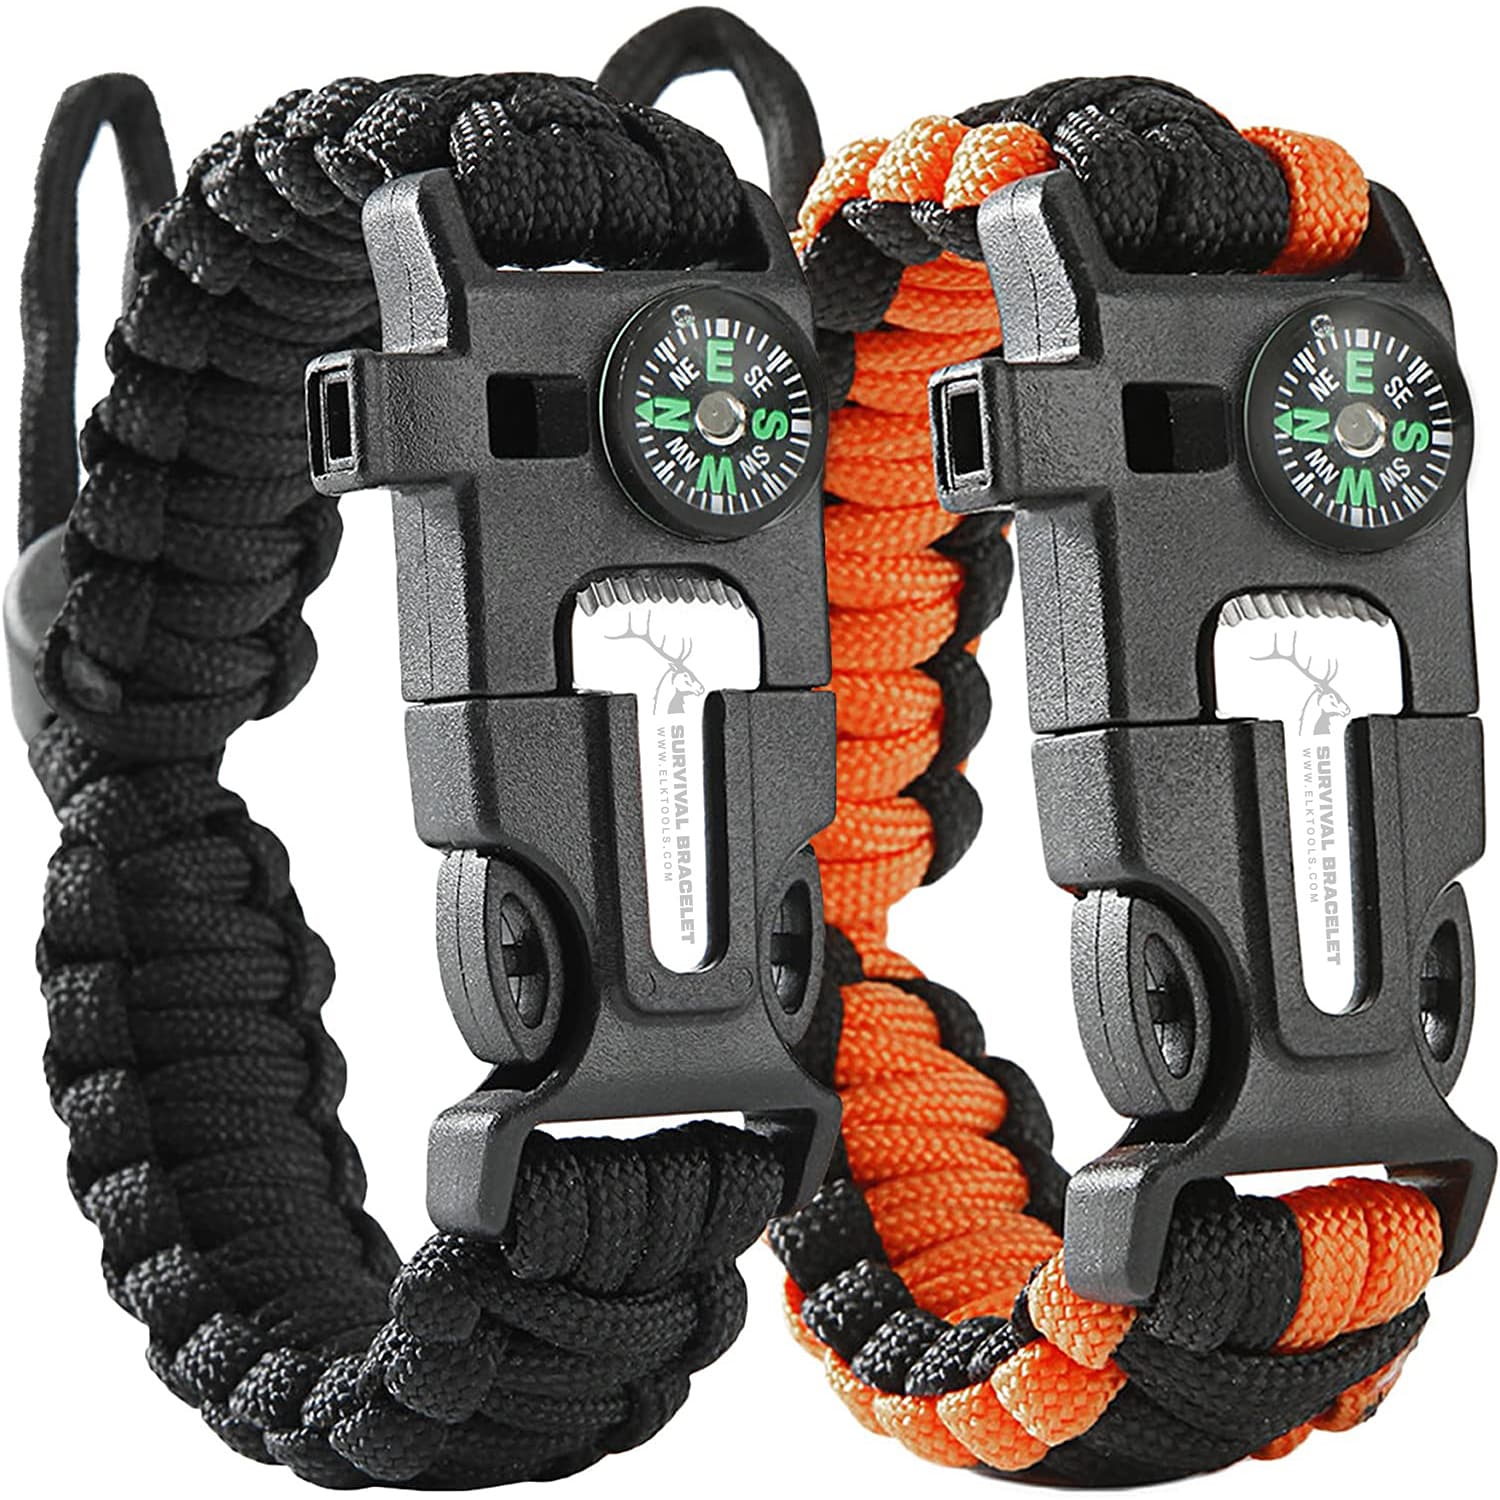 2-Pack Elk Paracord Survival Bracelets - Loud Whistle, Knife and Fire Starter